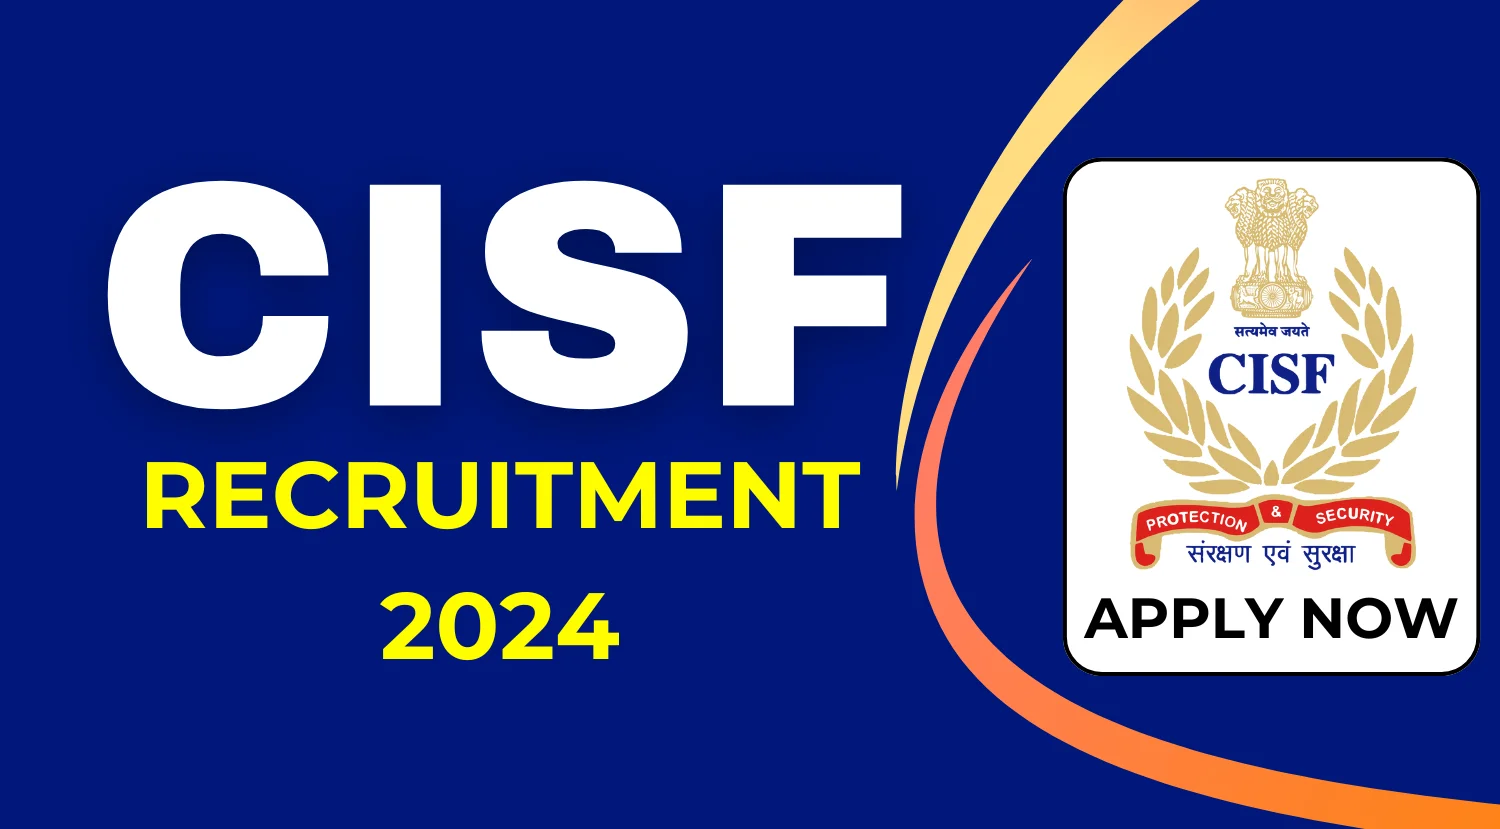 CISF Recruitment 2024 Notification for 100 Vacancies